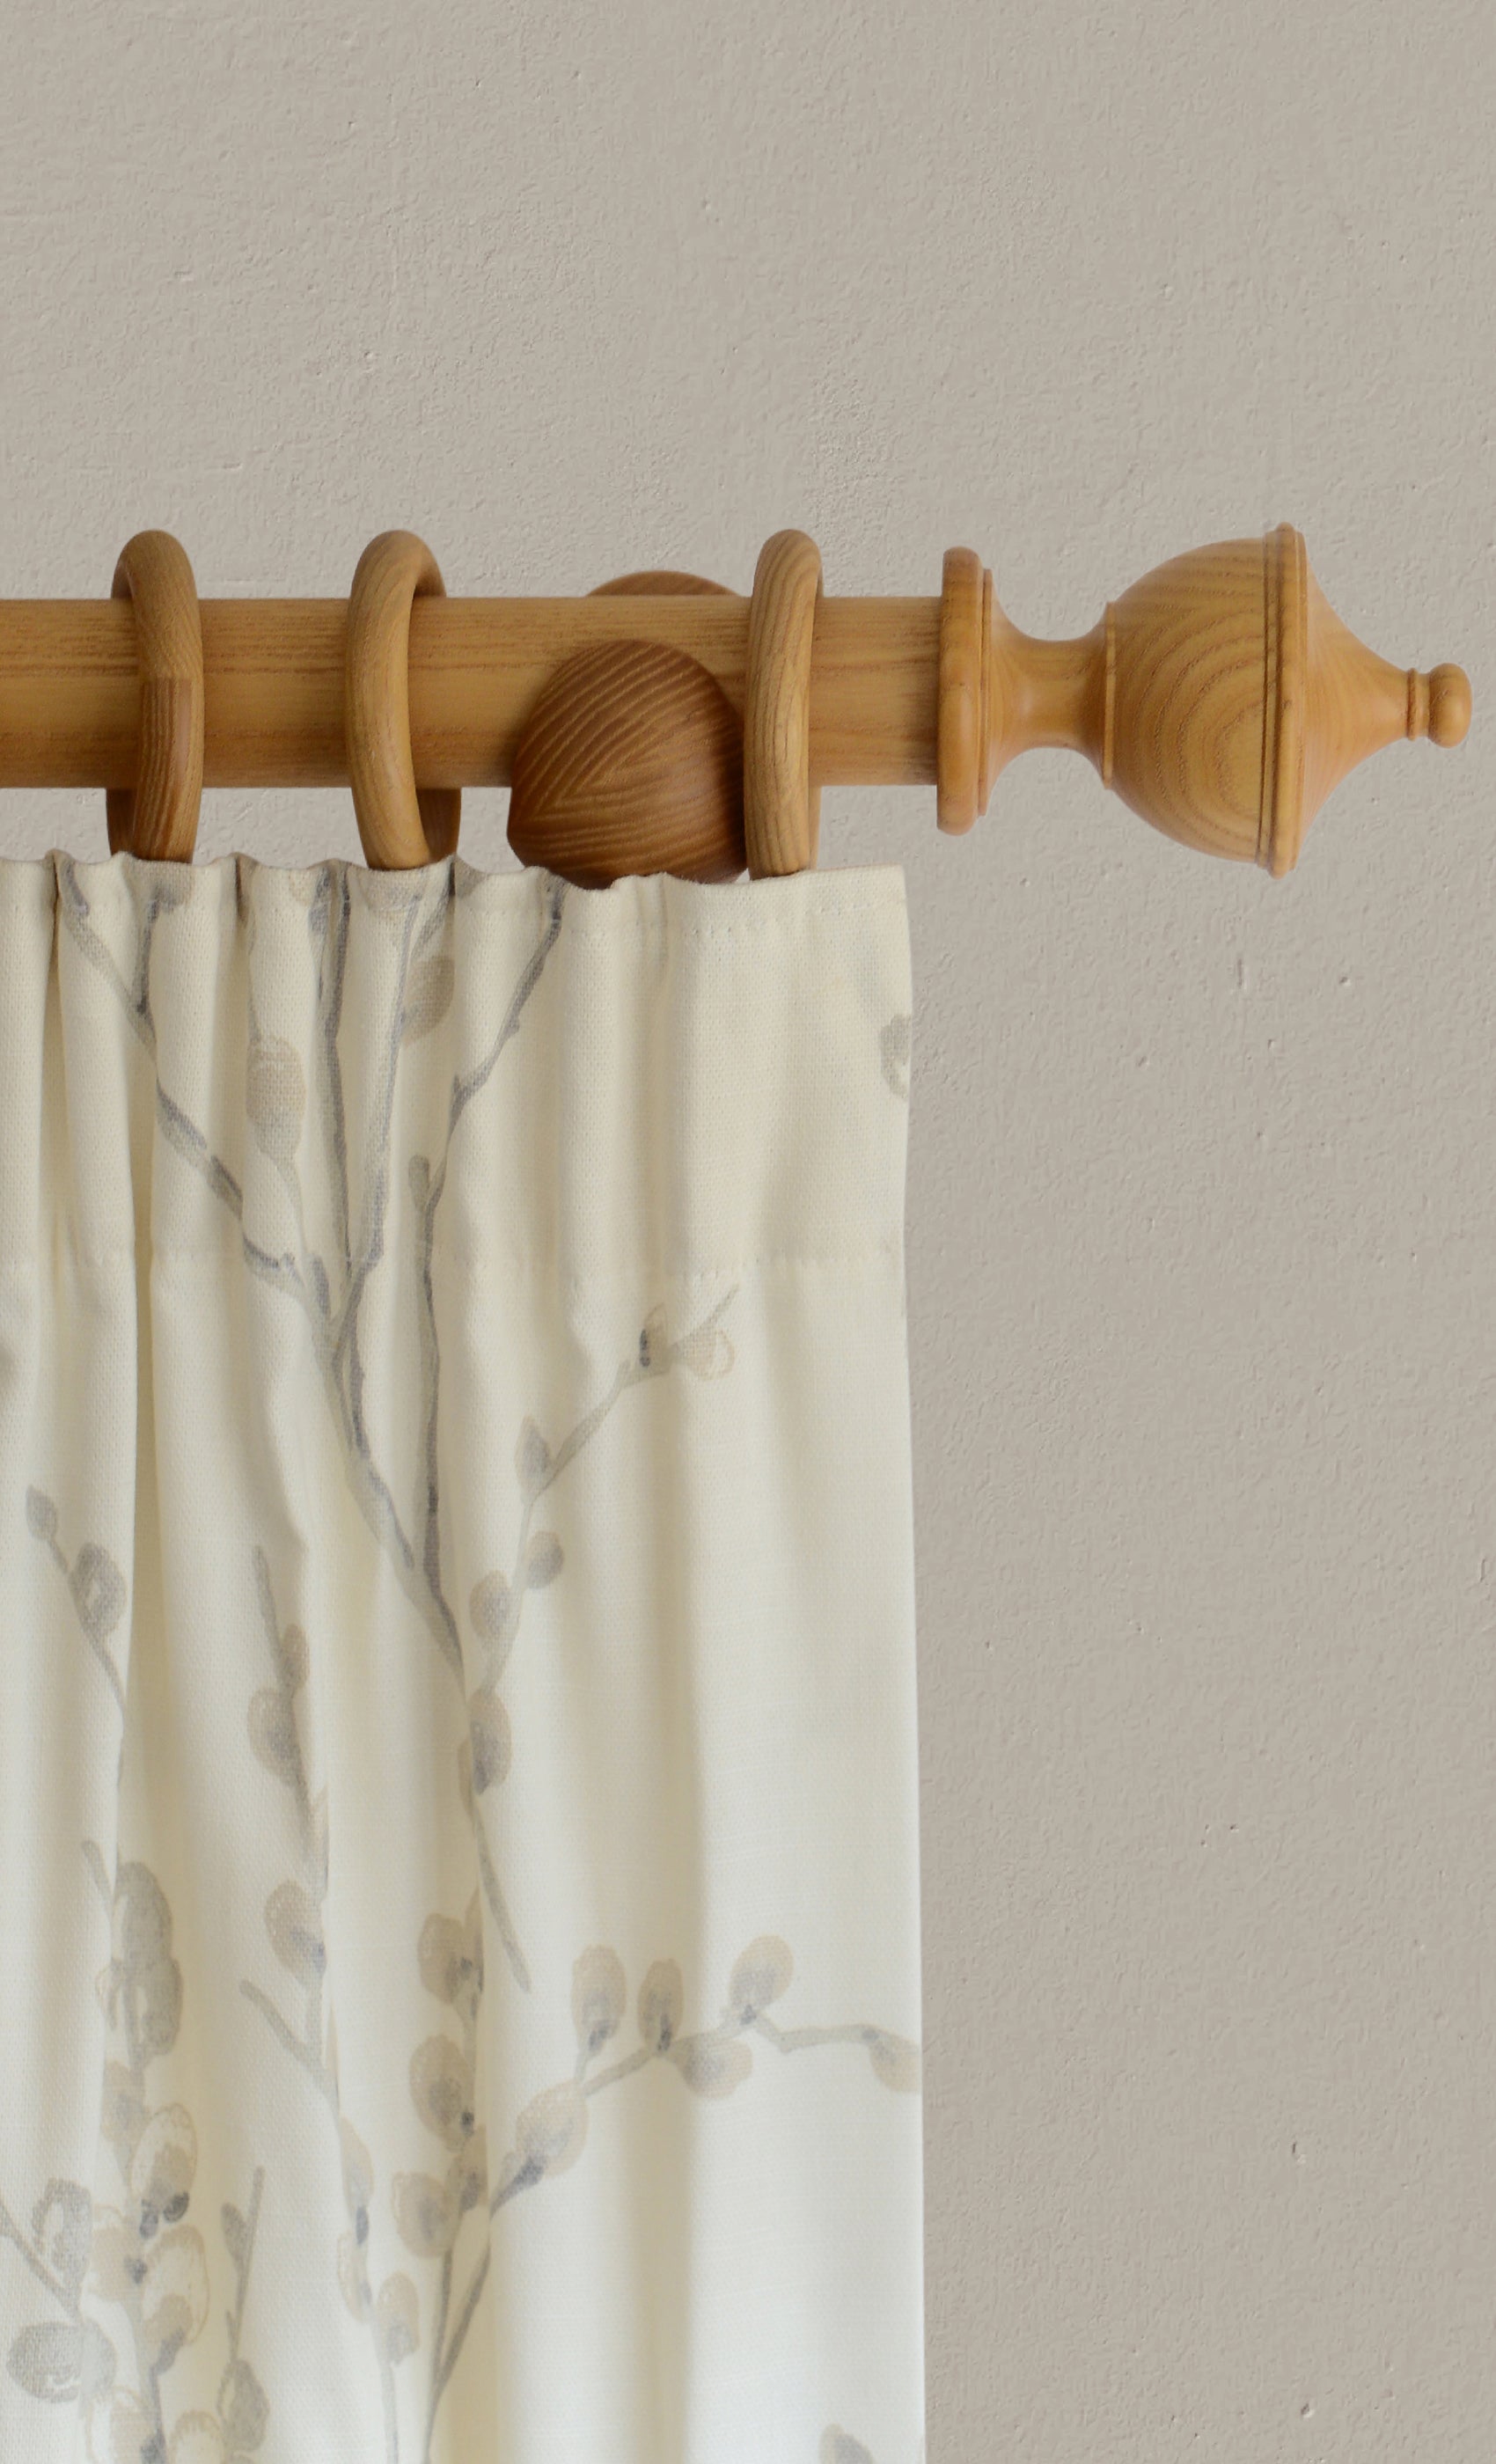 Laura Ashley Haywood Curtain Pole Set in Honey